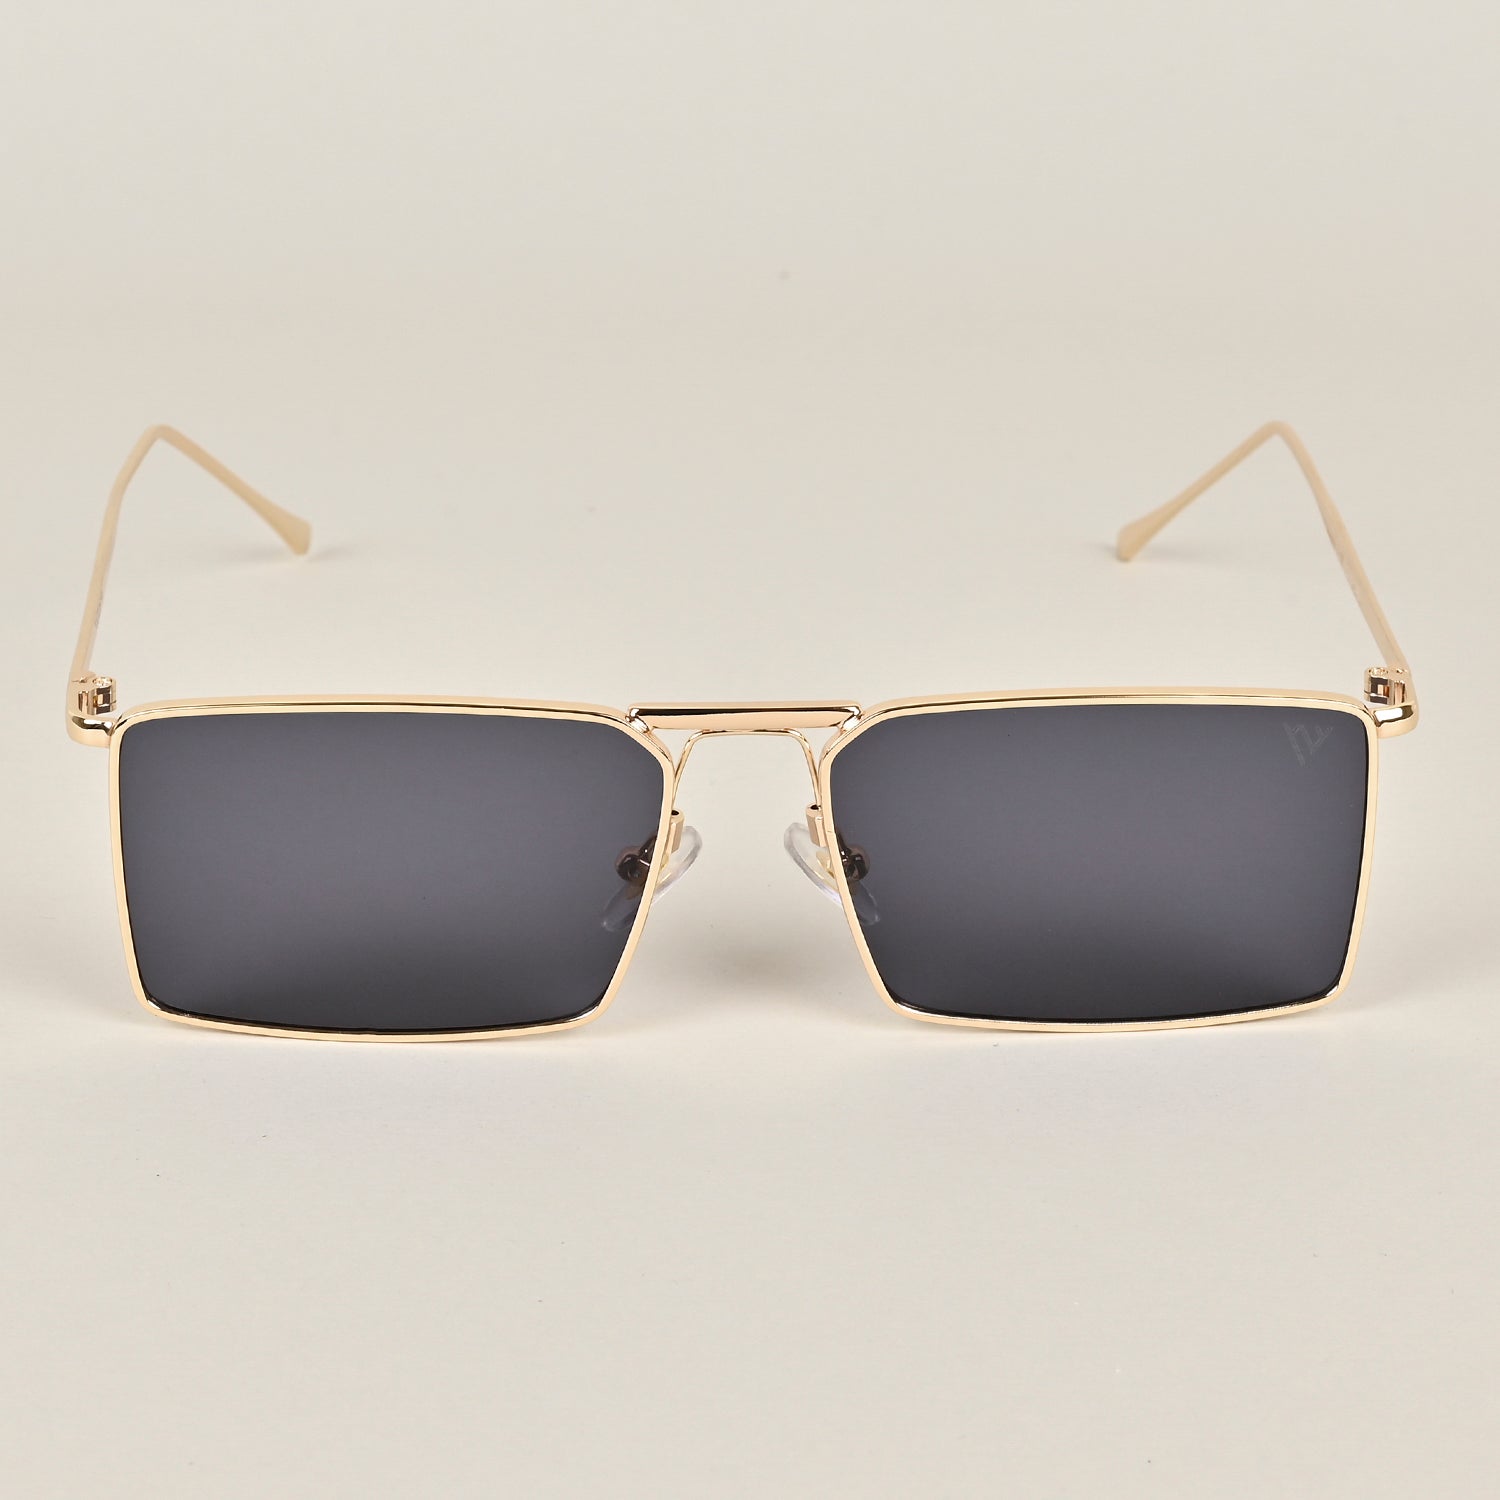 Voyage Black Gold Rectangular Sunglasses MG3572